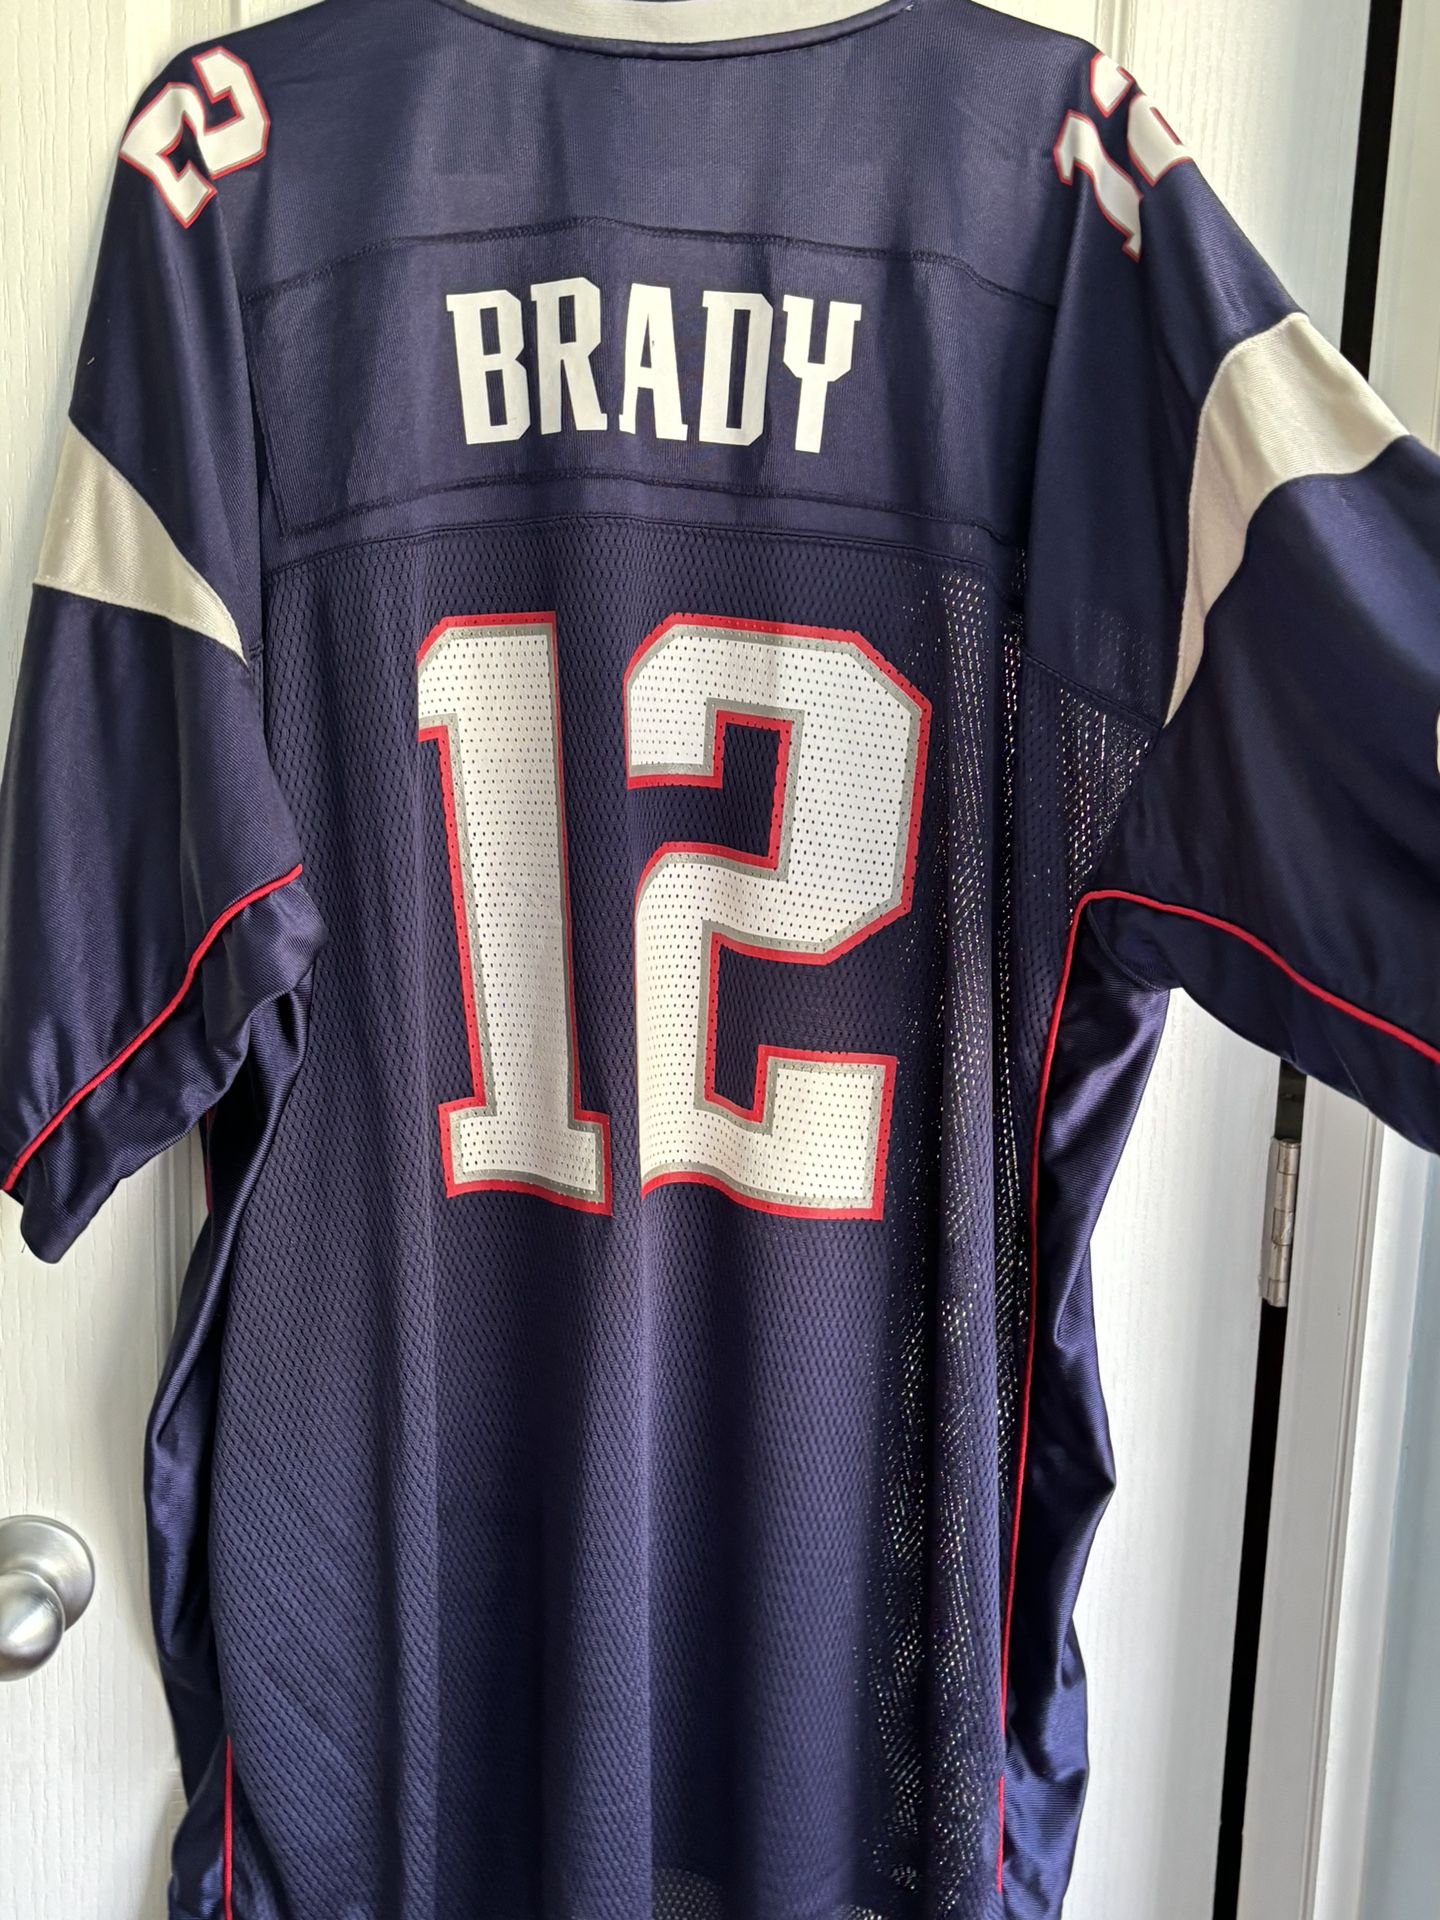 Tom Brady jersey New England Patriots NFL Reebok, men’s 4XL Tall